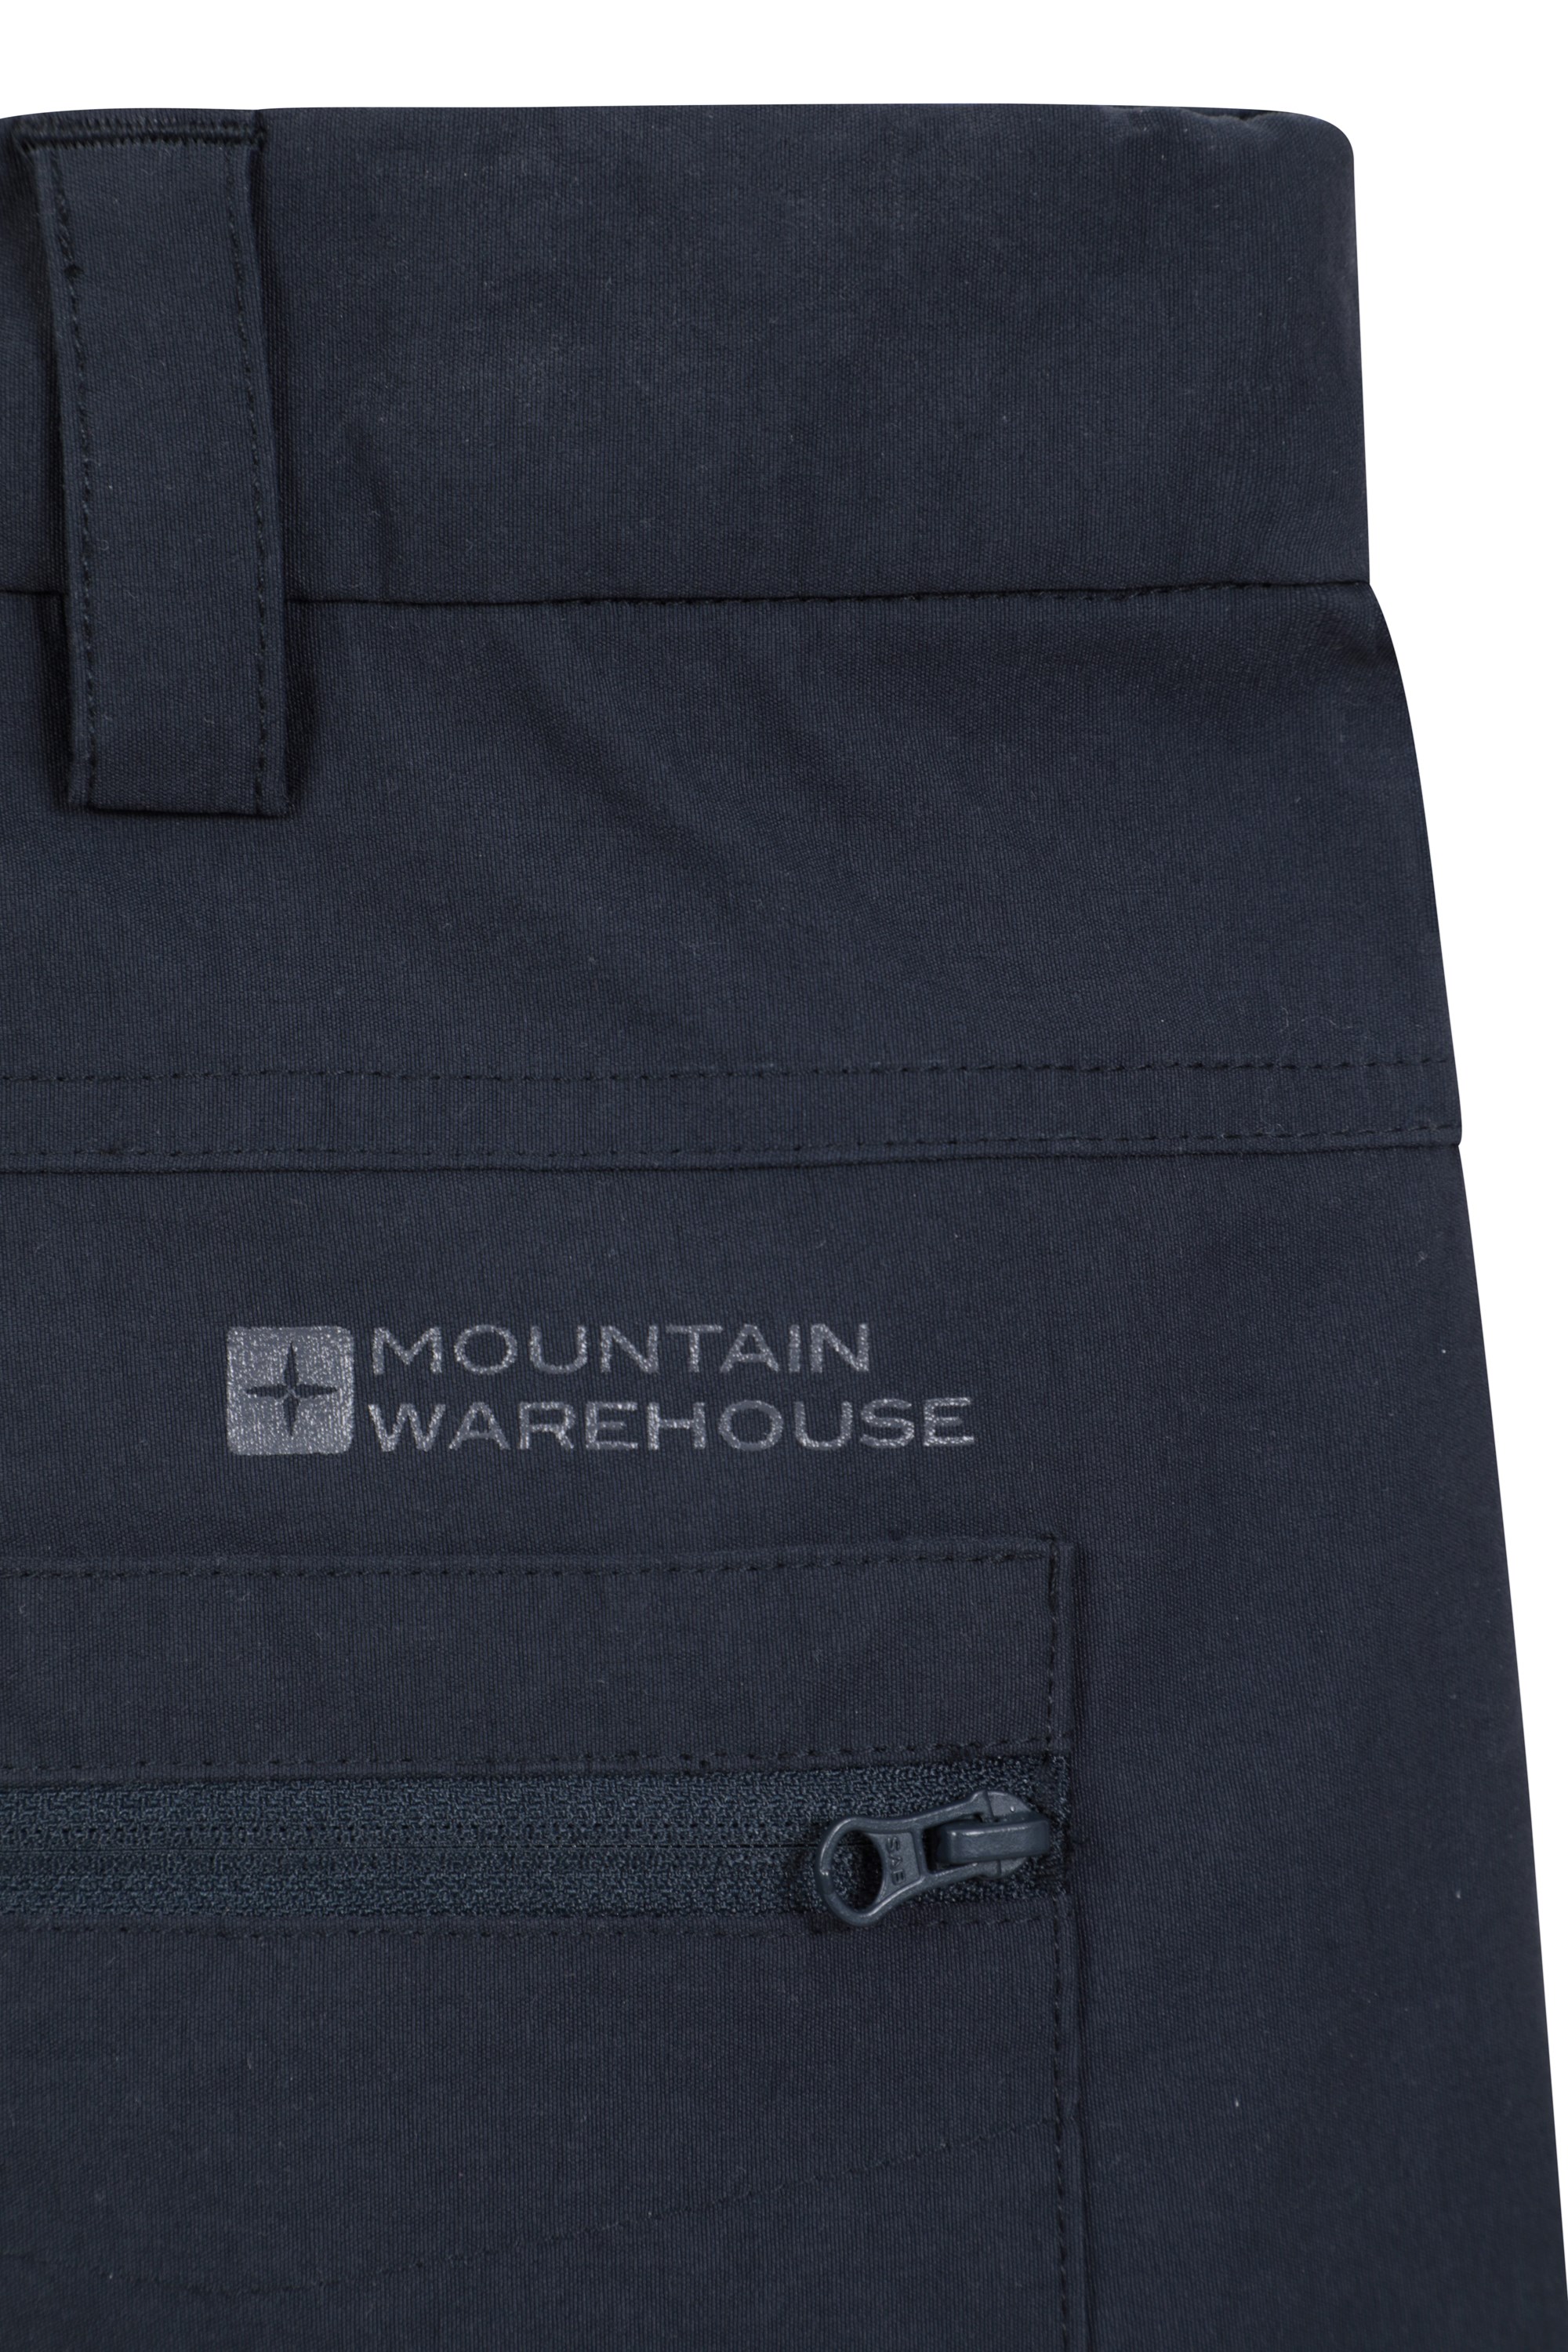 Mountain Warehouse Mens Trek Shorts Hiking Lightweight Comfortable Durable